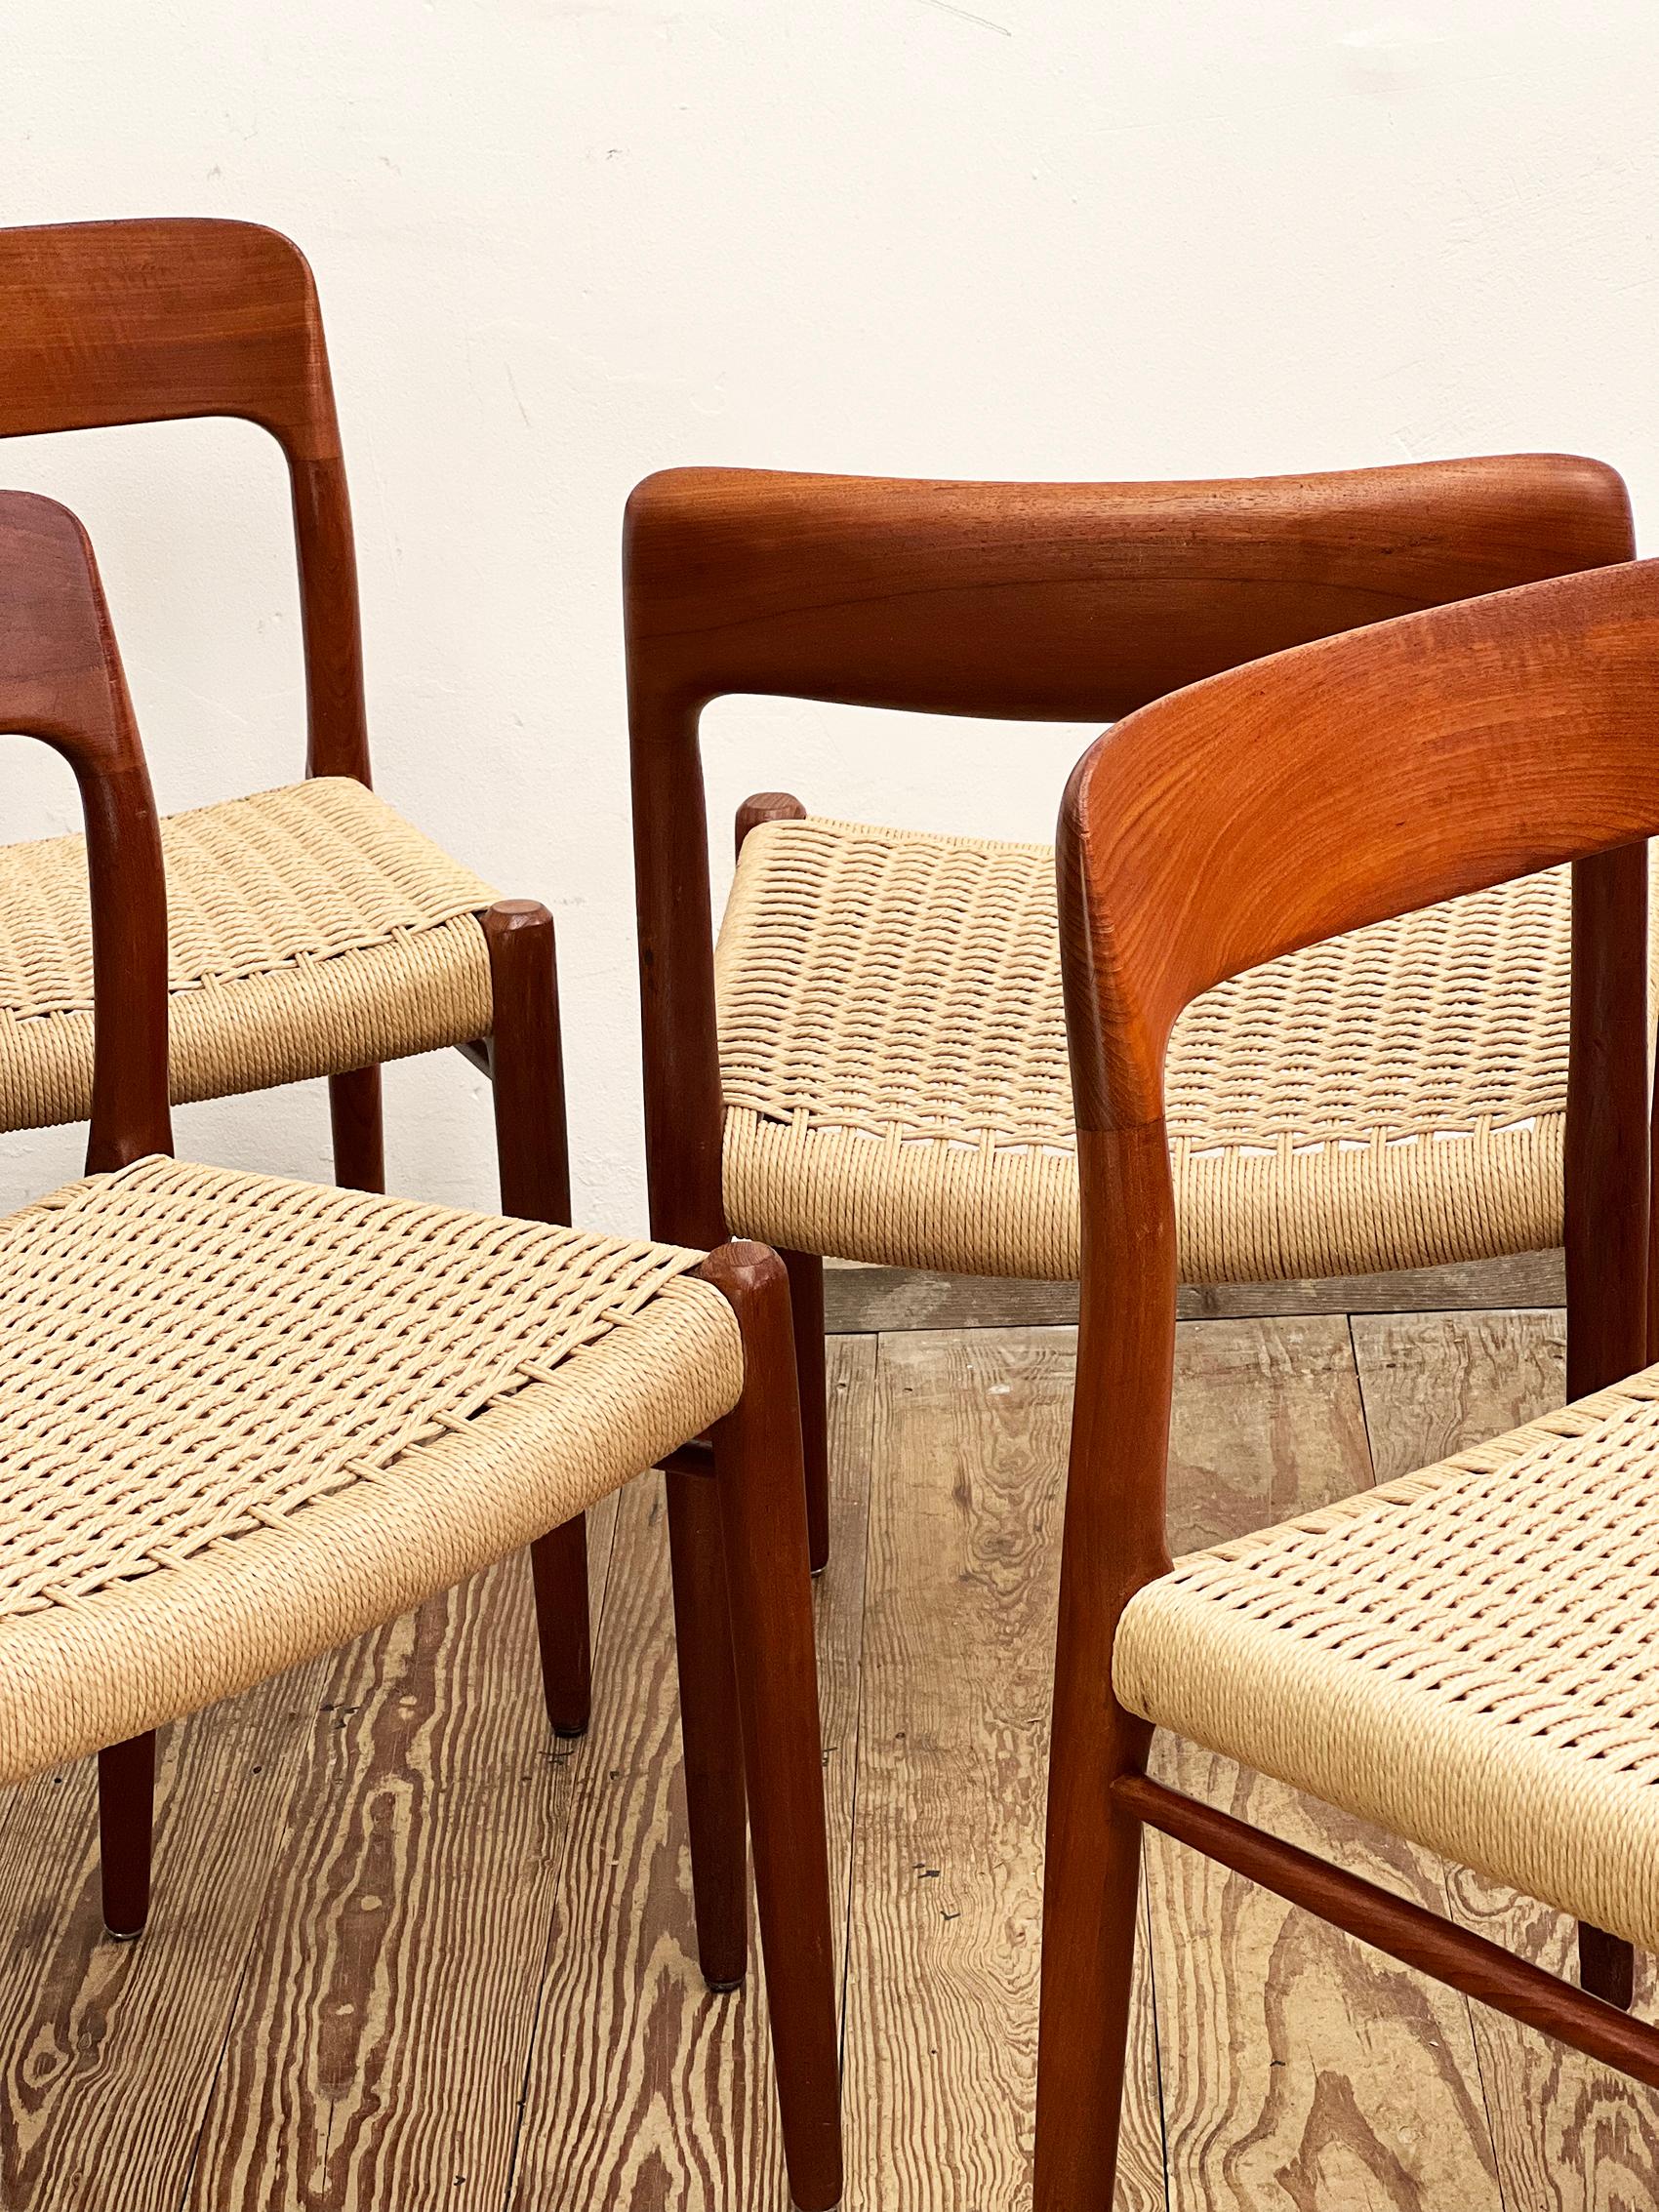 4 Midcentury Dining Chairs #75 in Teak, Danish Design, Niels Møller, J.L. Moller 1